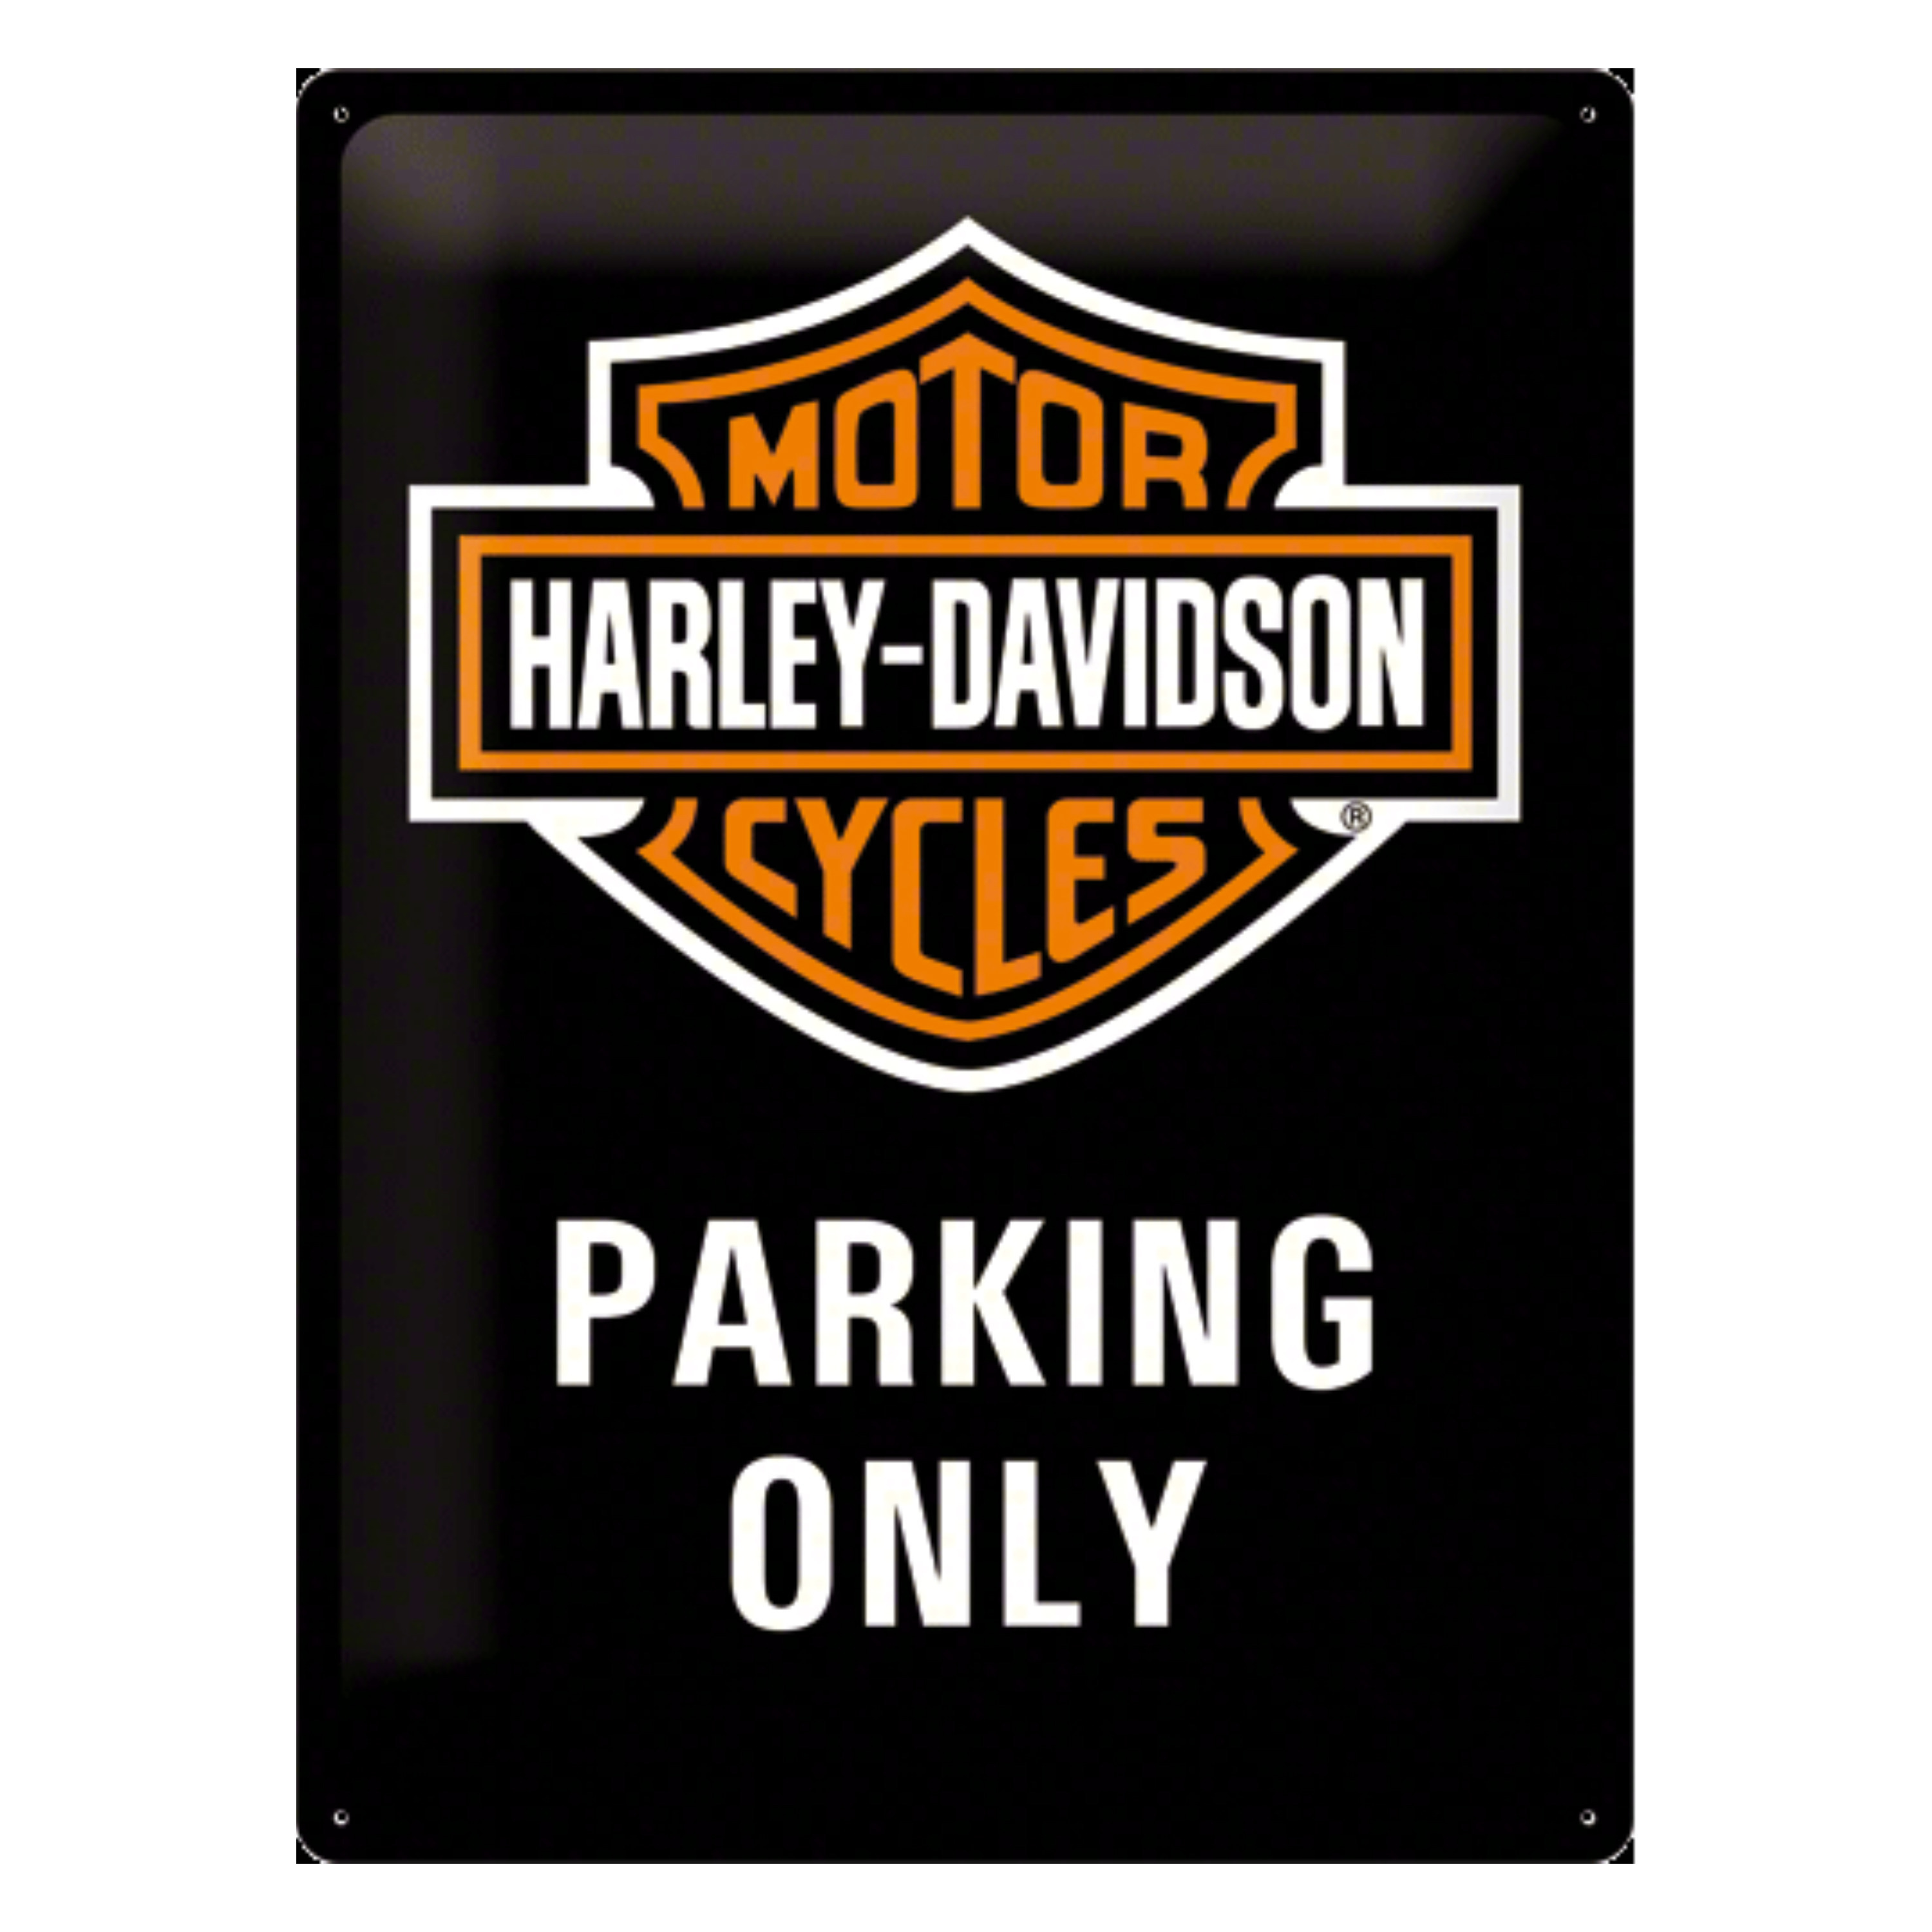 Muurplaatje Harley Davidson parking